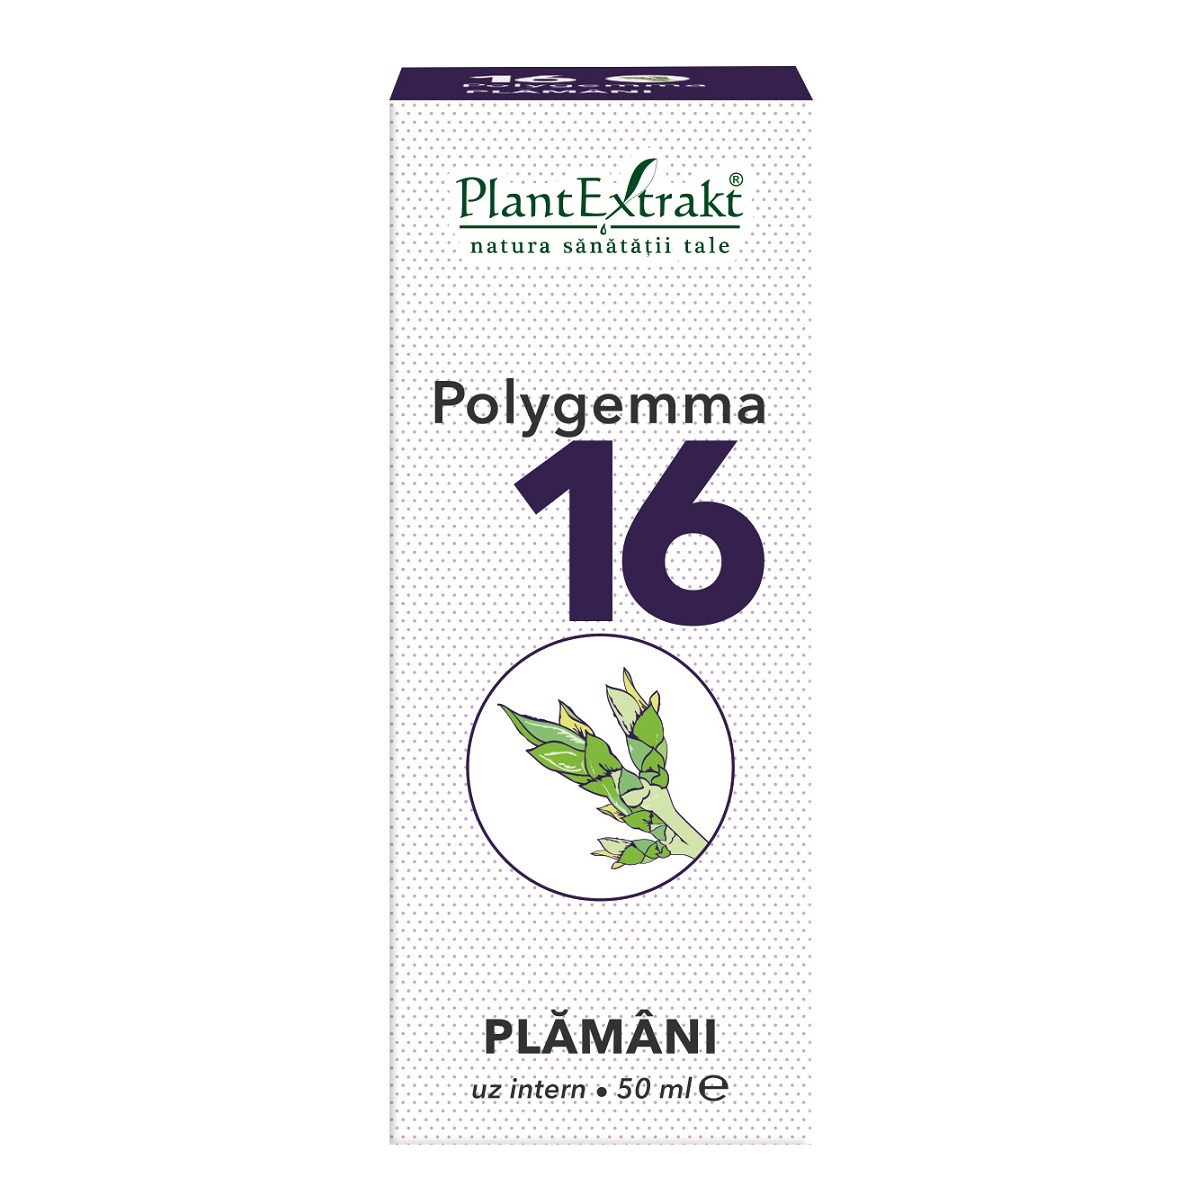 Polygemma 12 Rinichi detoxifiere - PlantExtrakt